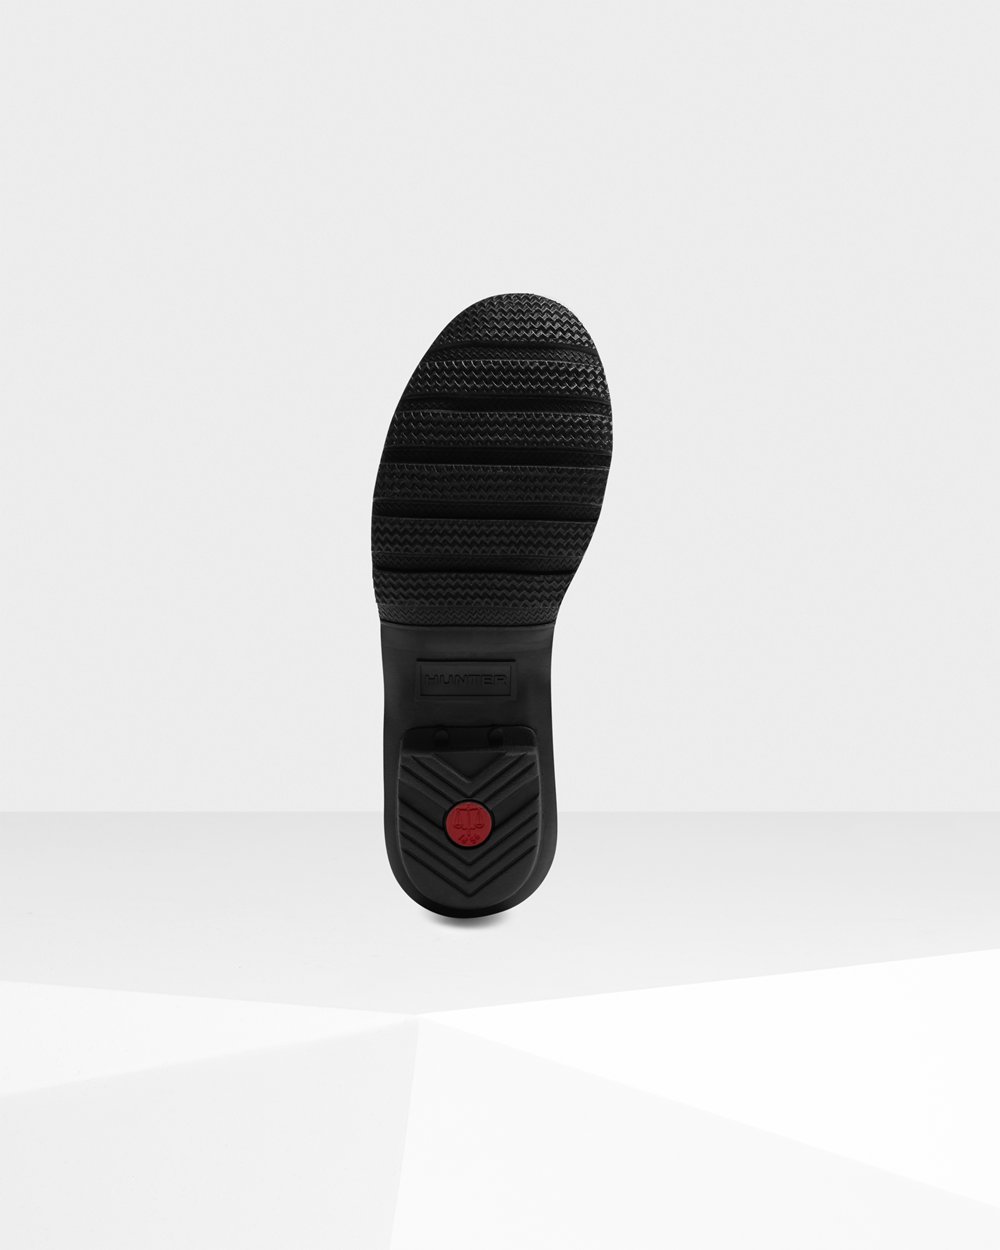 Womens Tall Rain Boots - Hunter Original Exploded Logo Texture (35YEQDRXU) - Black